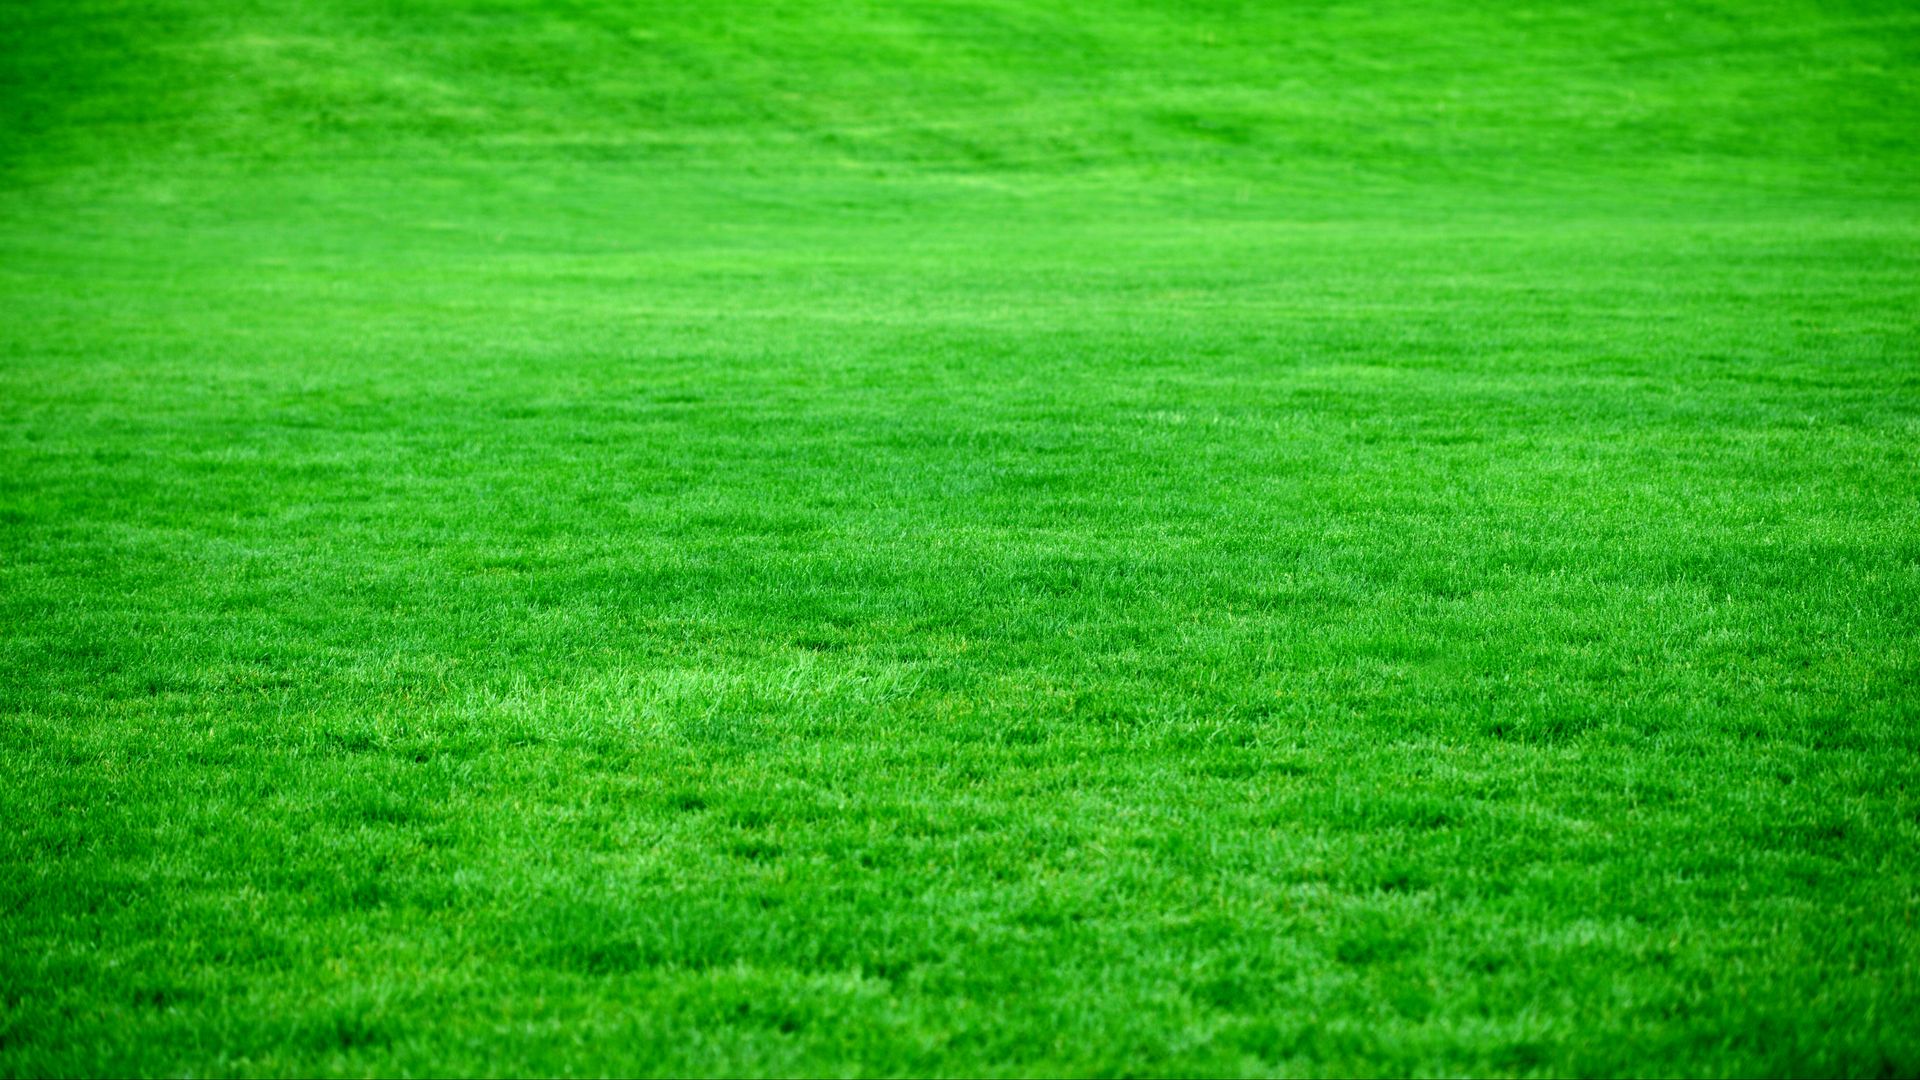 Download wallpaper 1920x1080 grass, lawn, green, bright full hd, hdtv, fhd,  1080p hd background